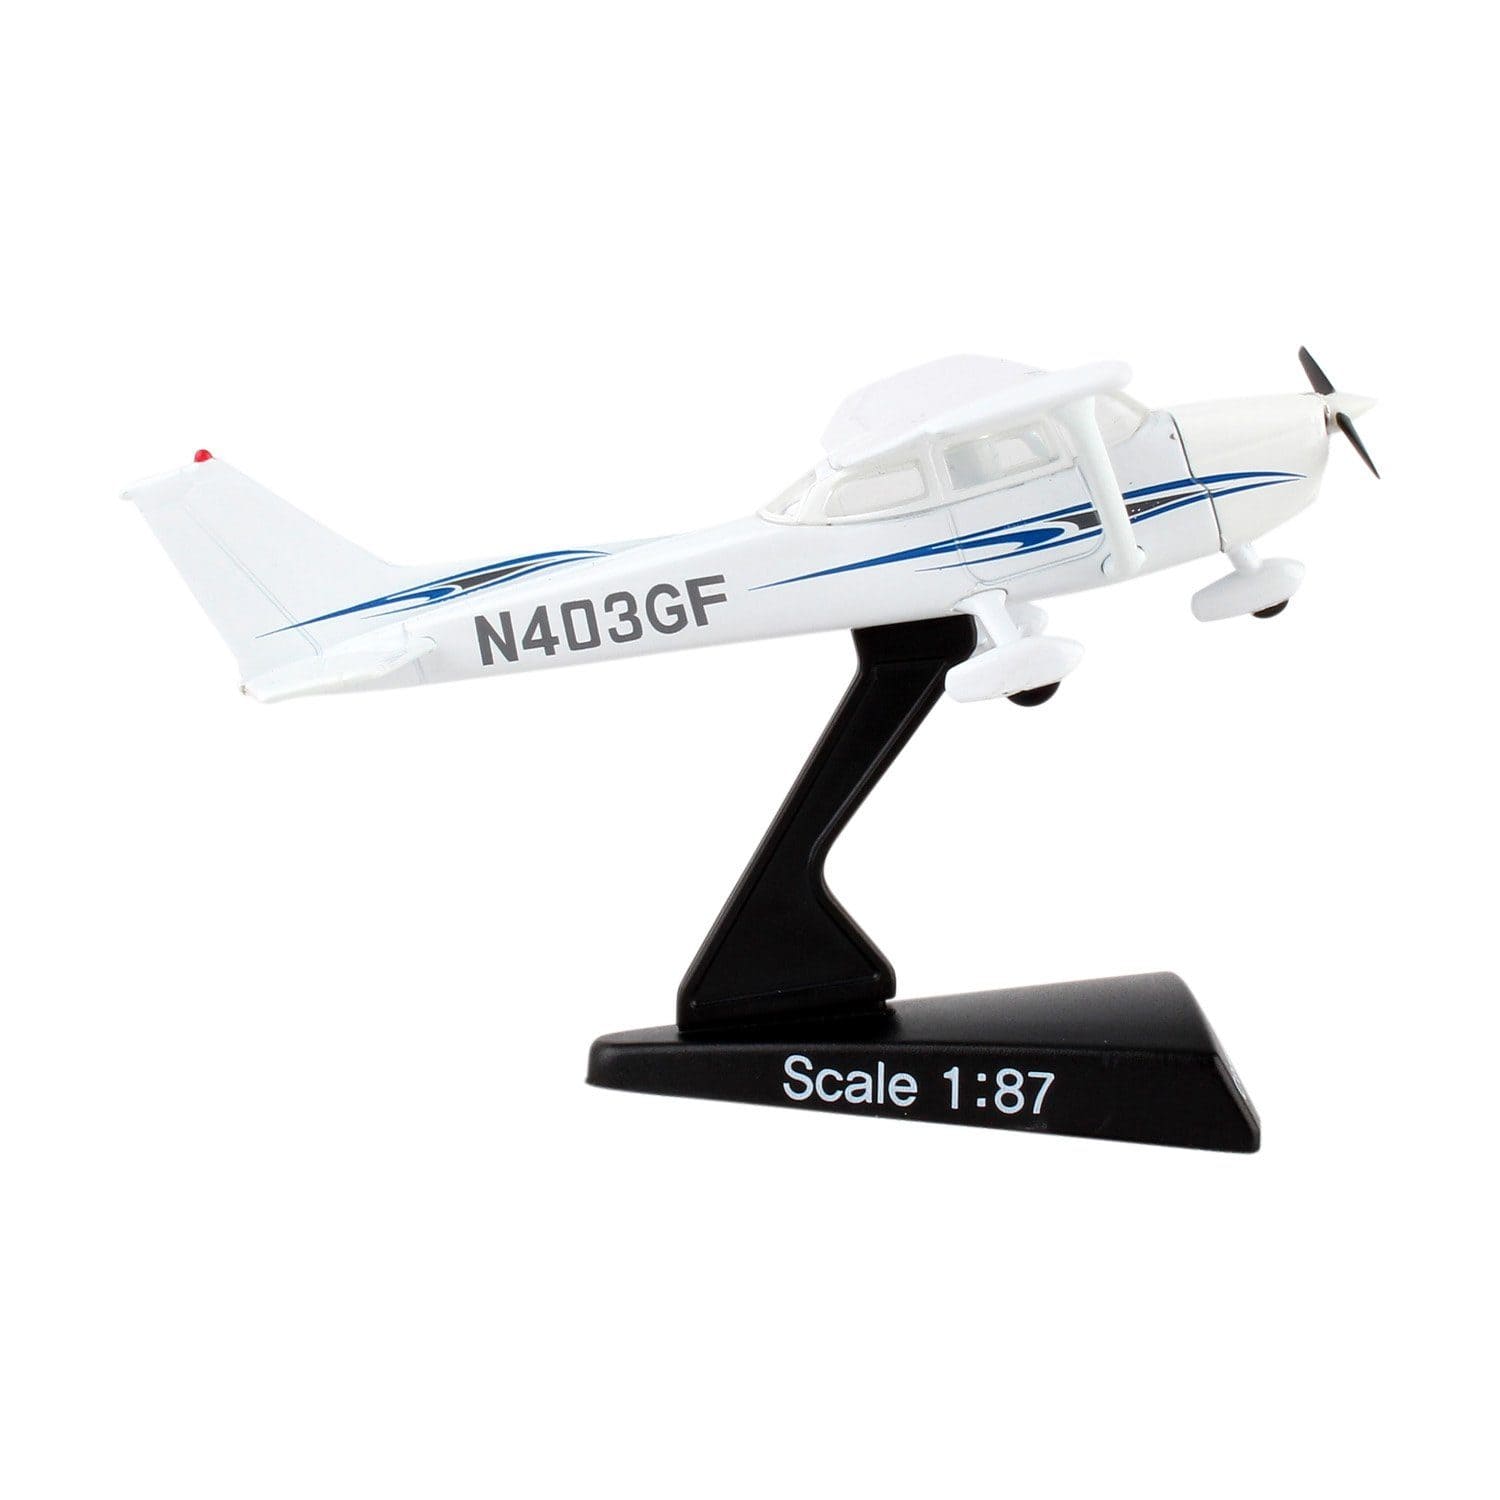 Postage Stamp Cessna 172 Skyhawk 1/87 Die-Cast Metal Model Aircraft